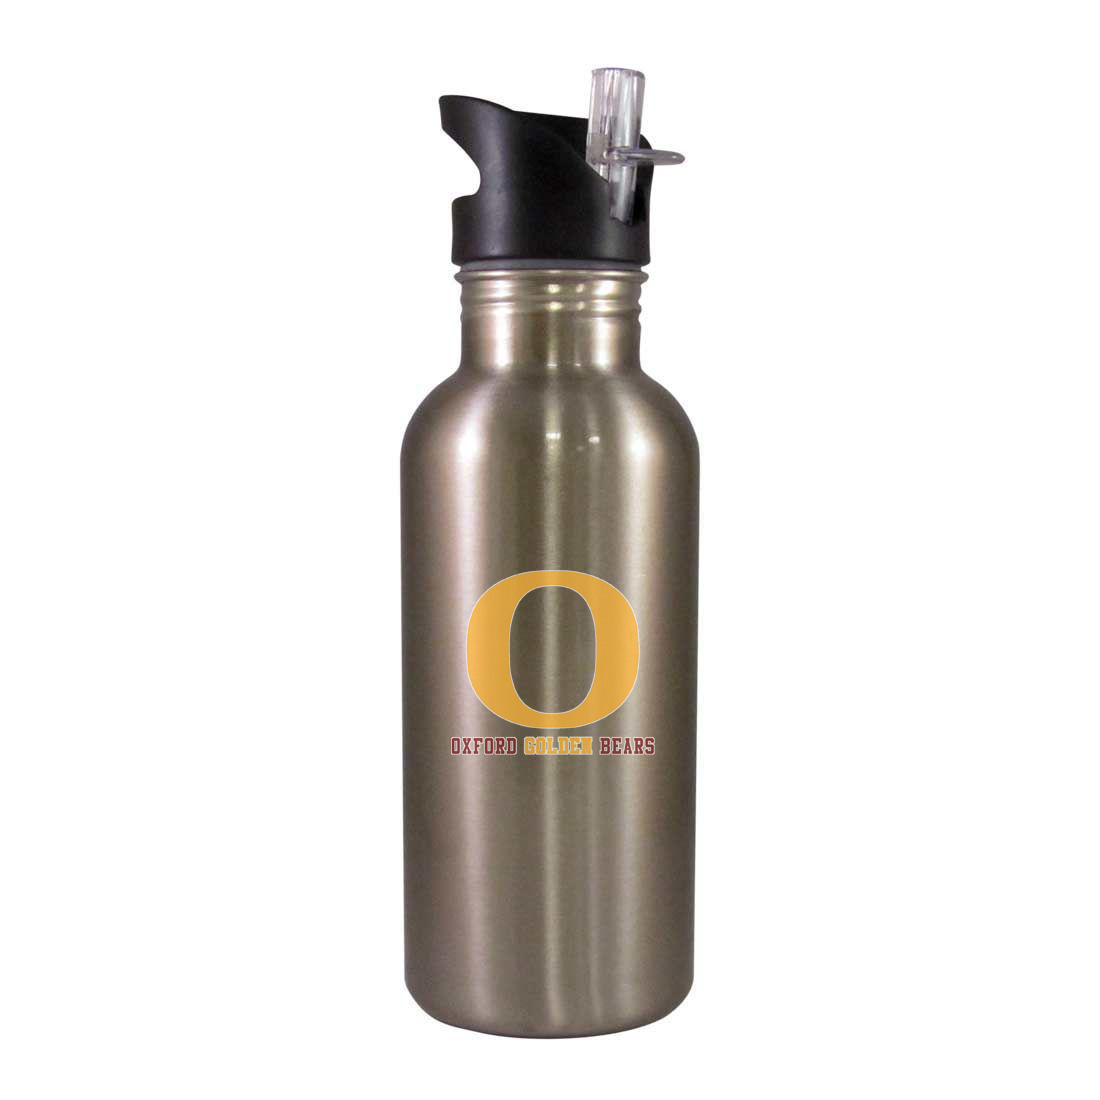 Oxford Golden Bears Team Water Bottle